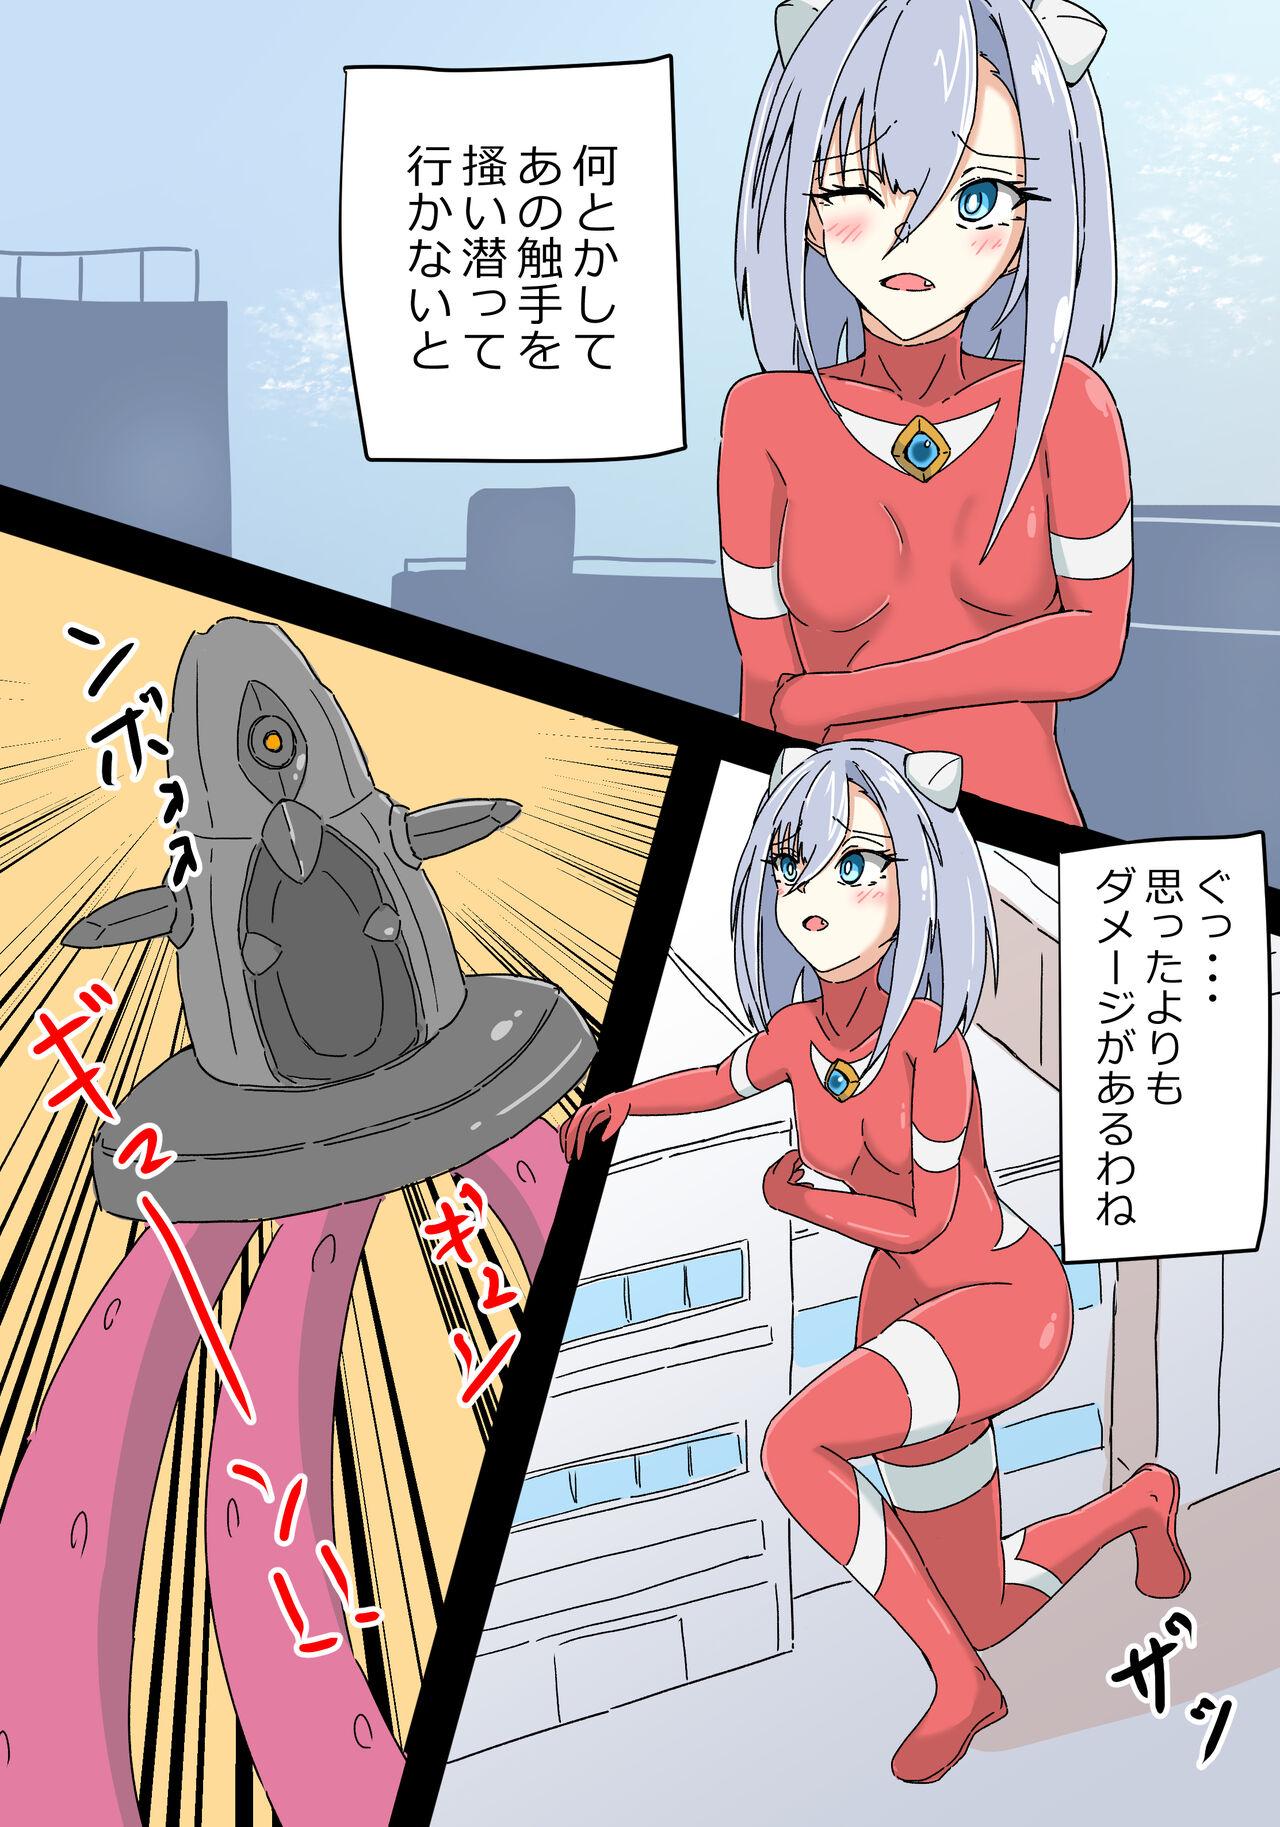 She 銀河光姫リーディア - Ultraman Interracial - Page 7